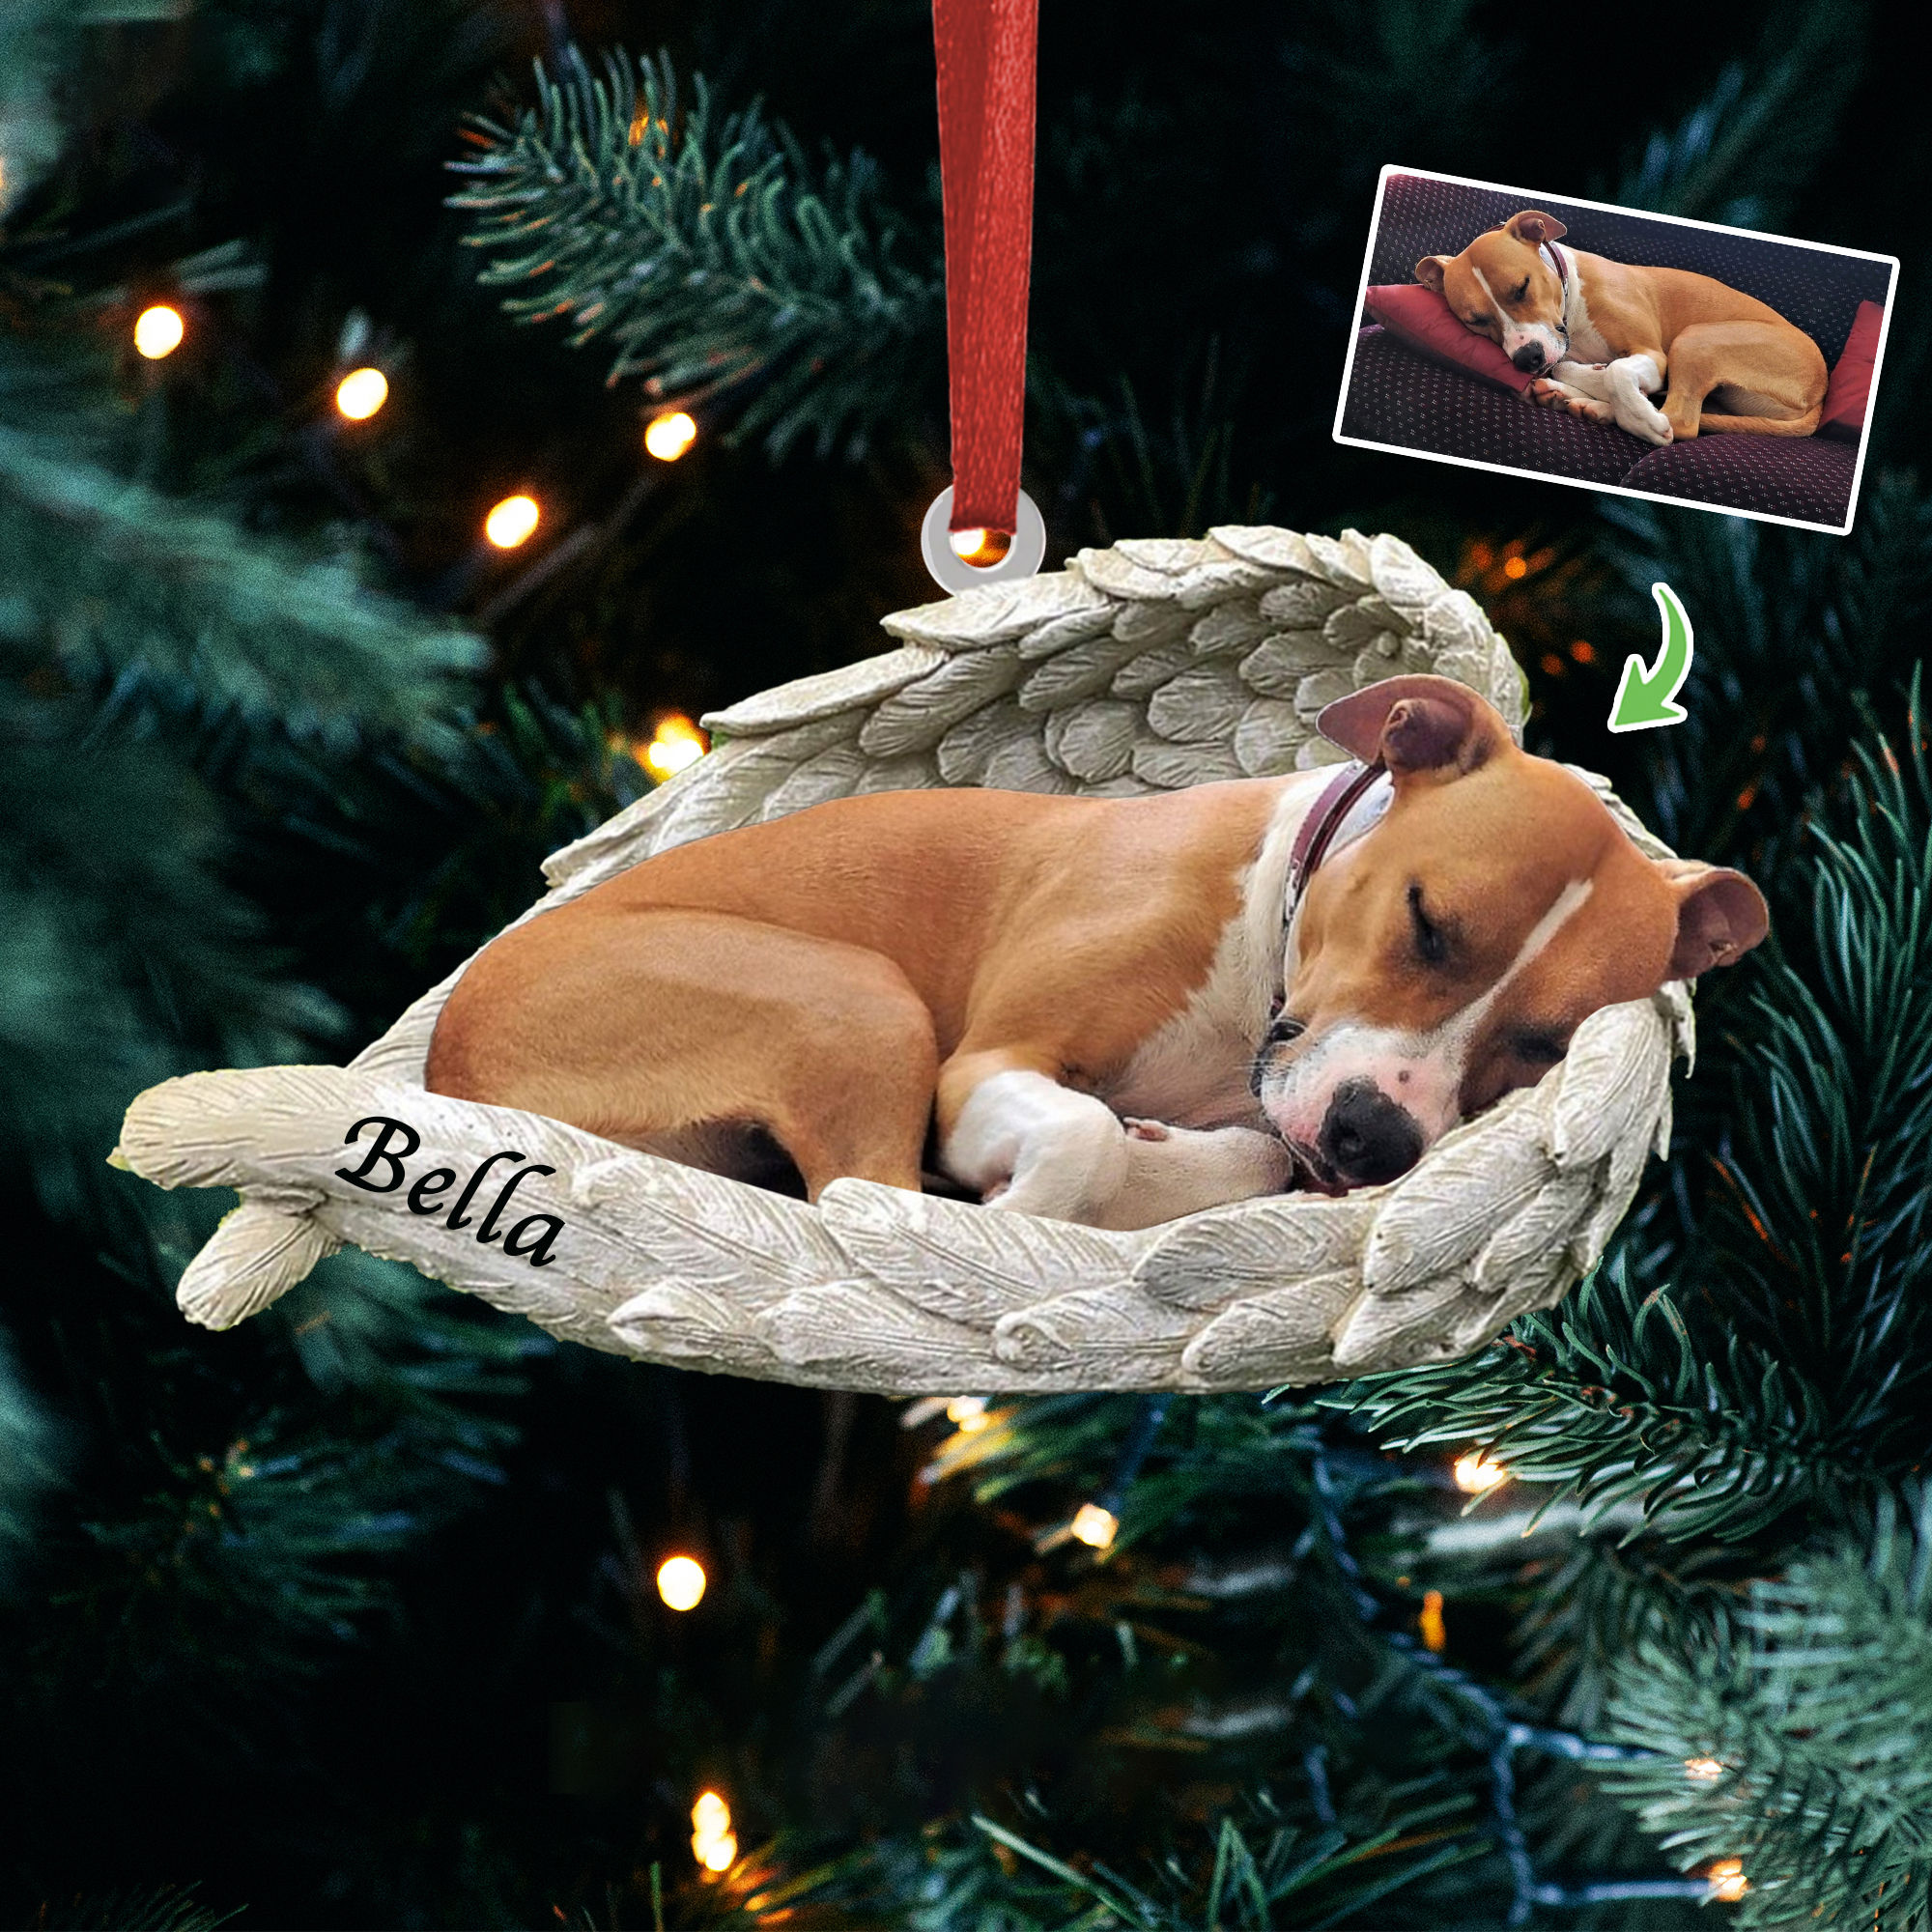 15 Dog Christmas Gifts for Dog Lovers